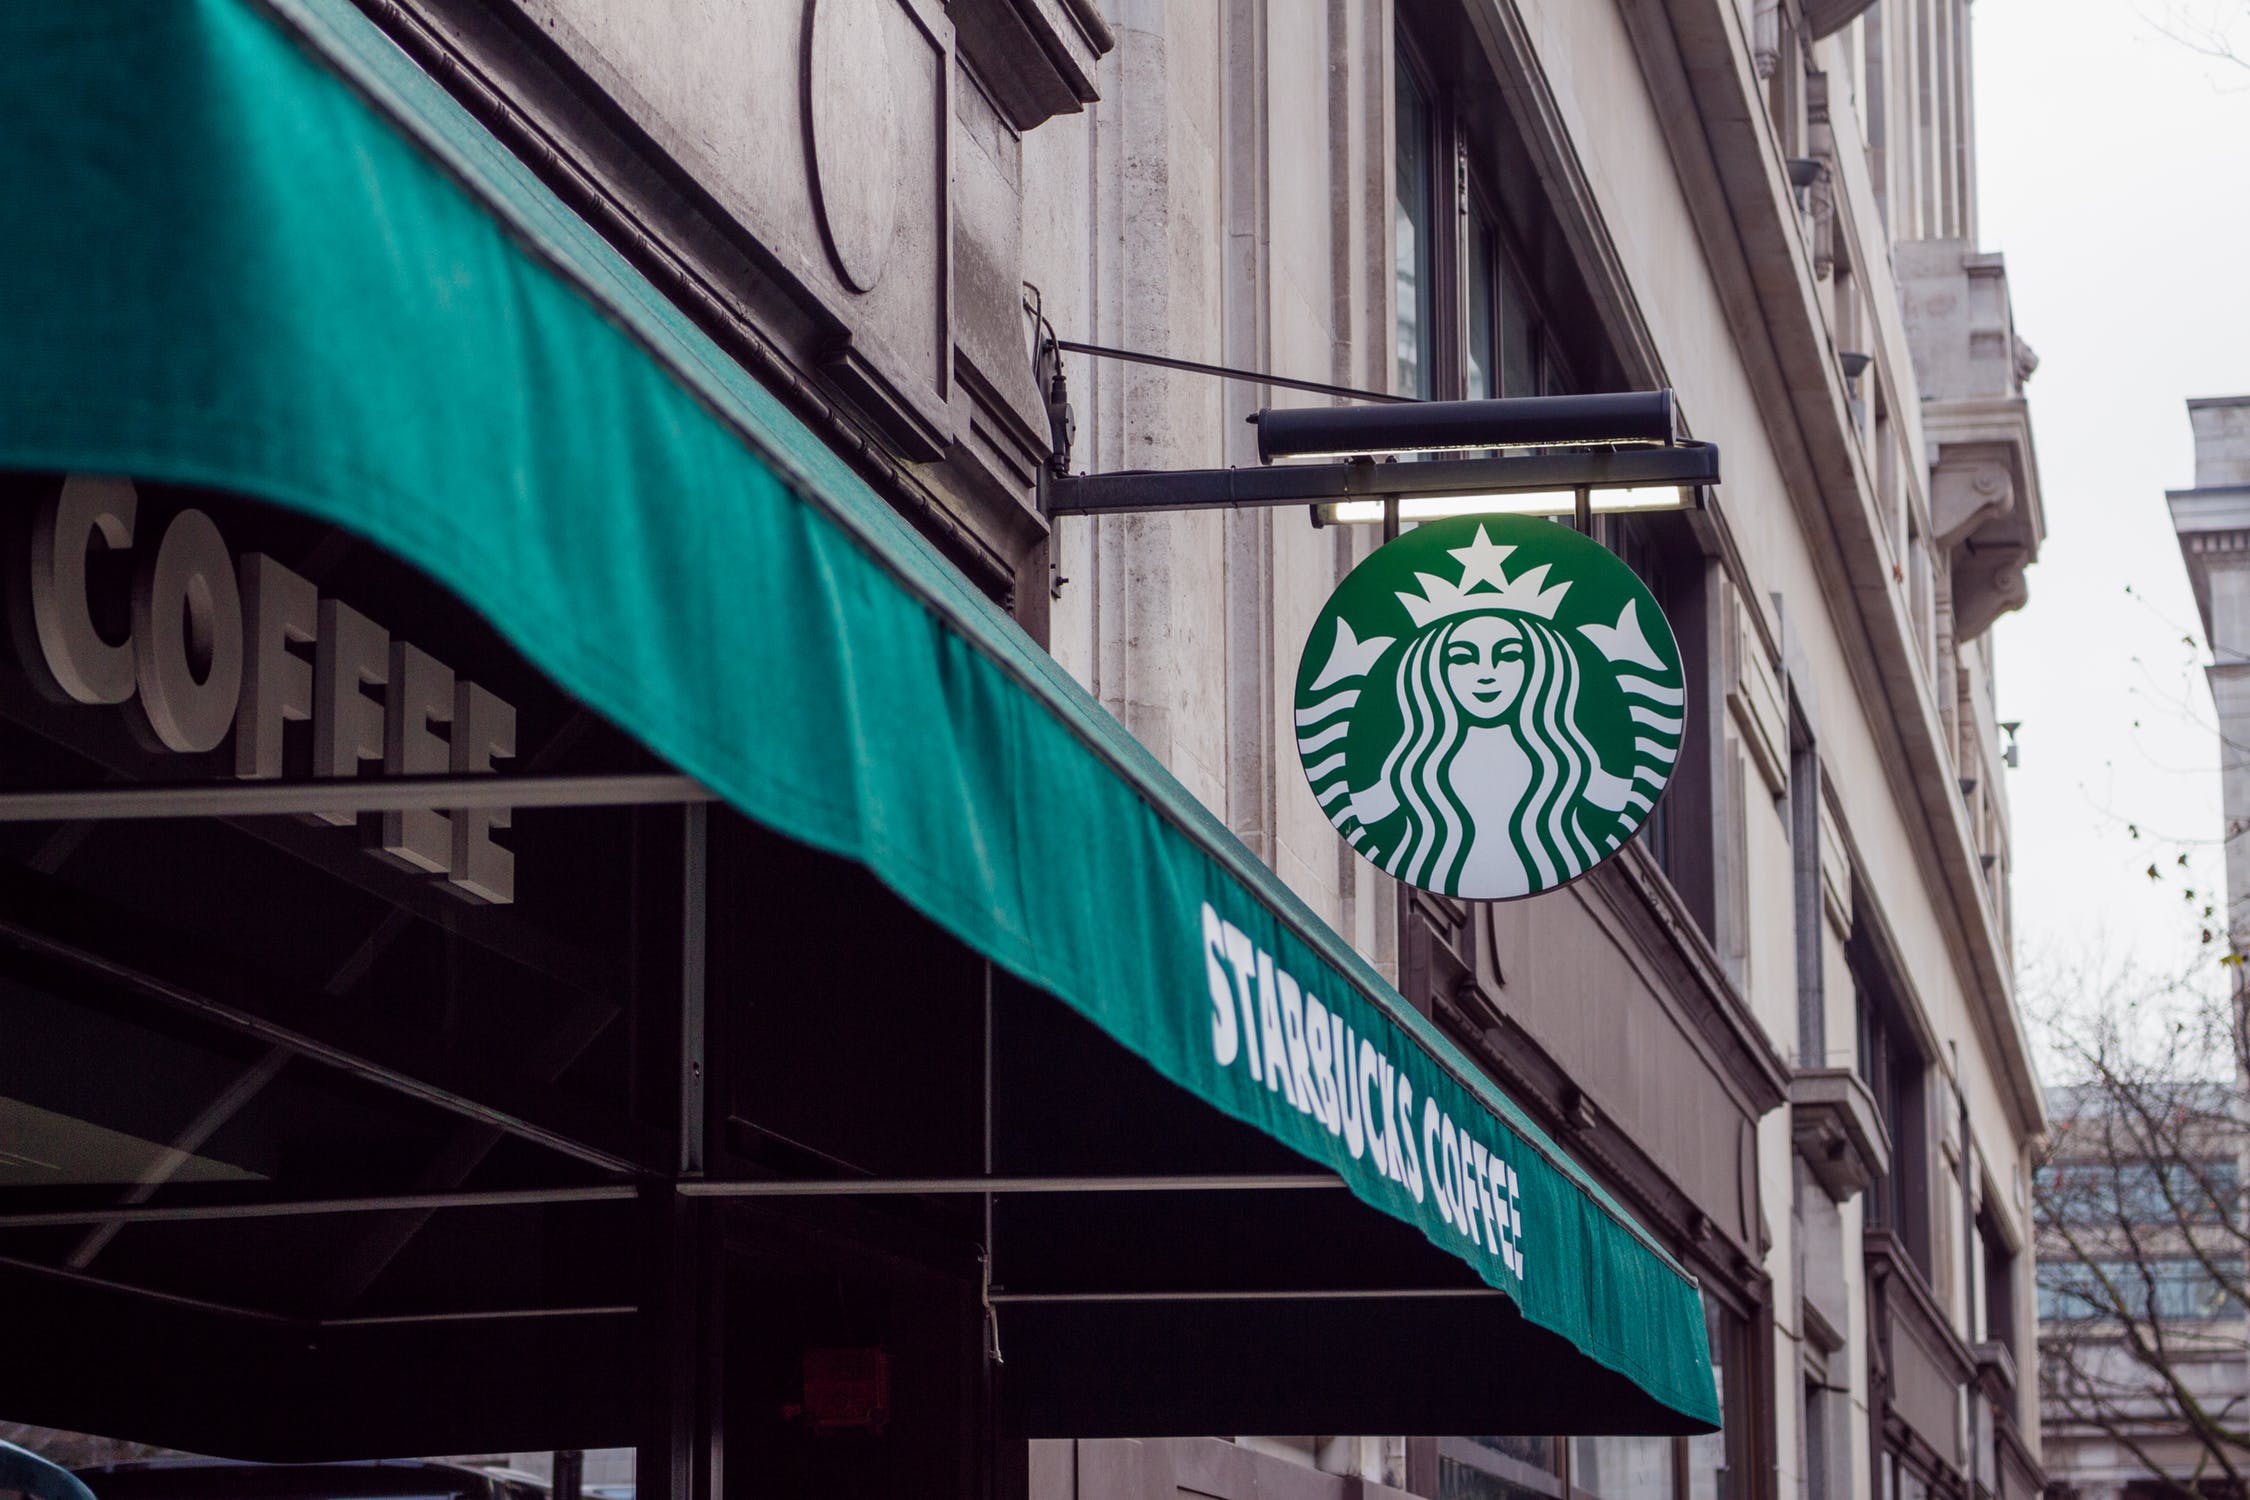 Starbucks sign above cafe